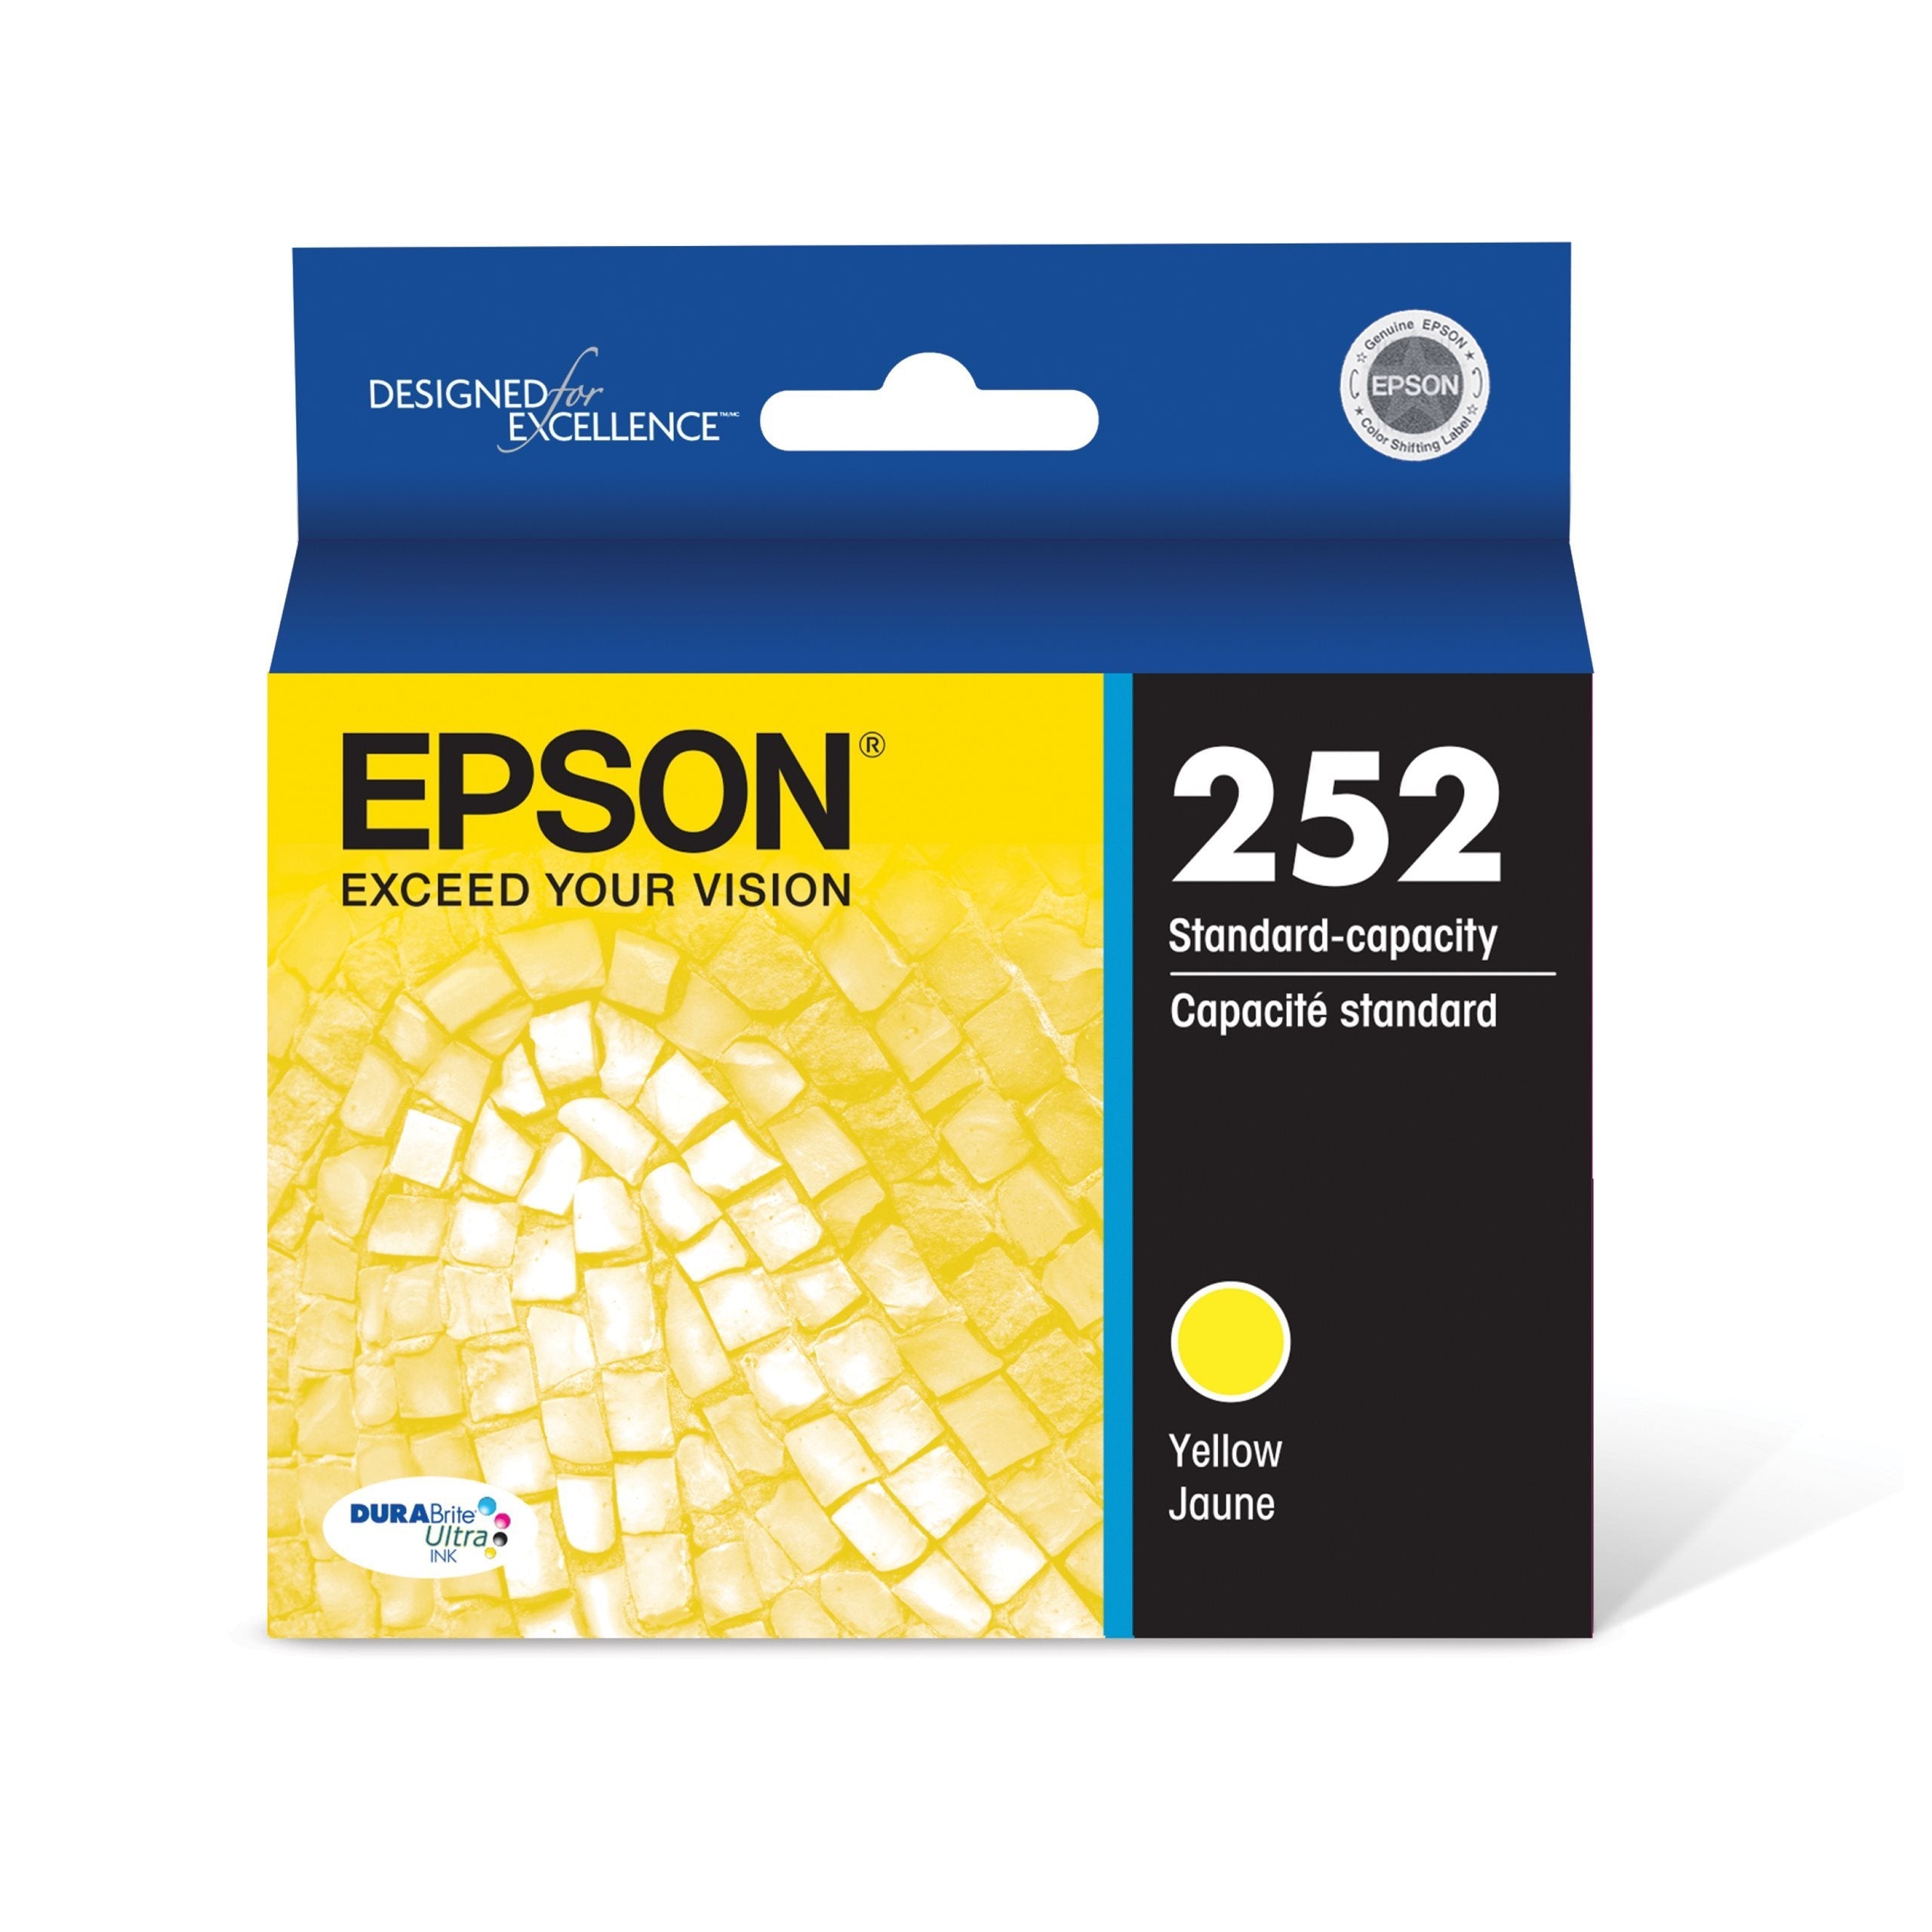 Absolute Toner Epson 252 Original Genuine OEM Durabrite Yellow Ink Cartridge | T252420S Original Epson Cartridge